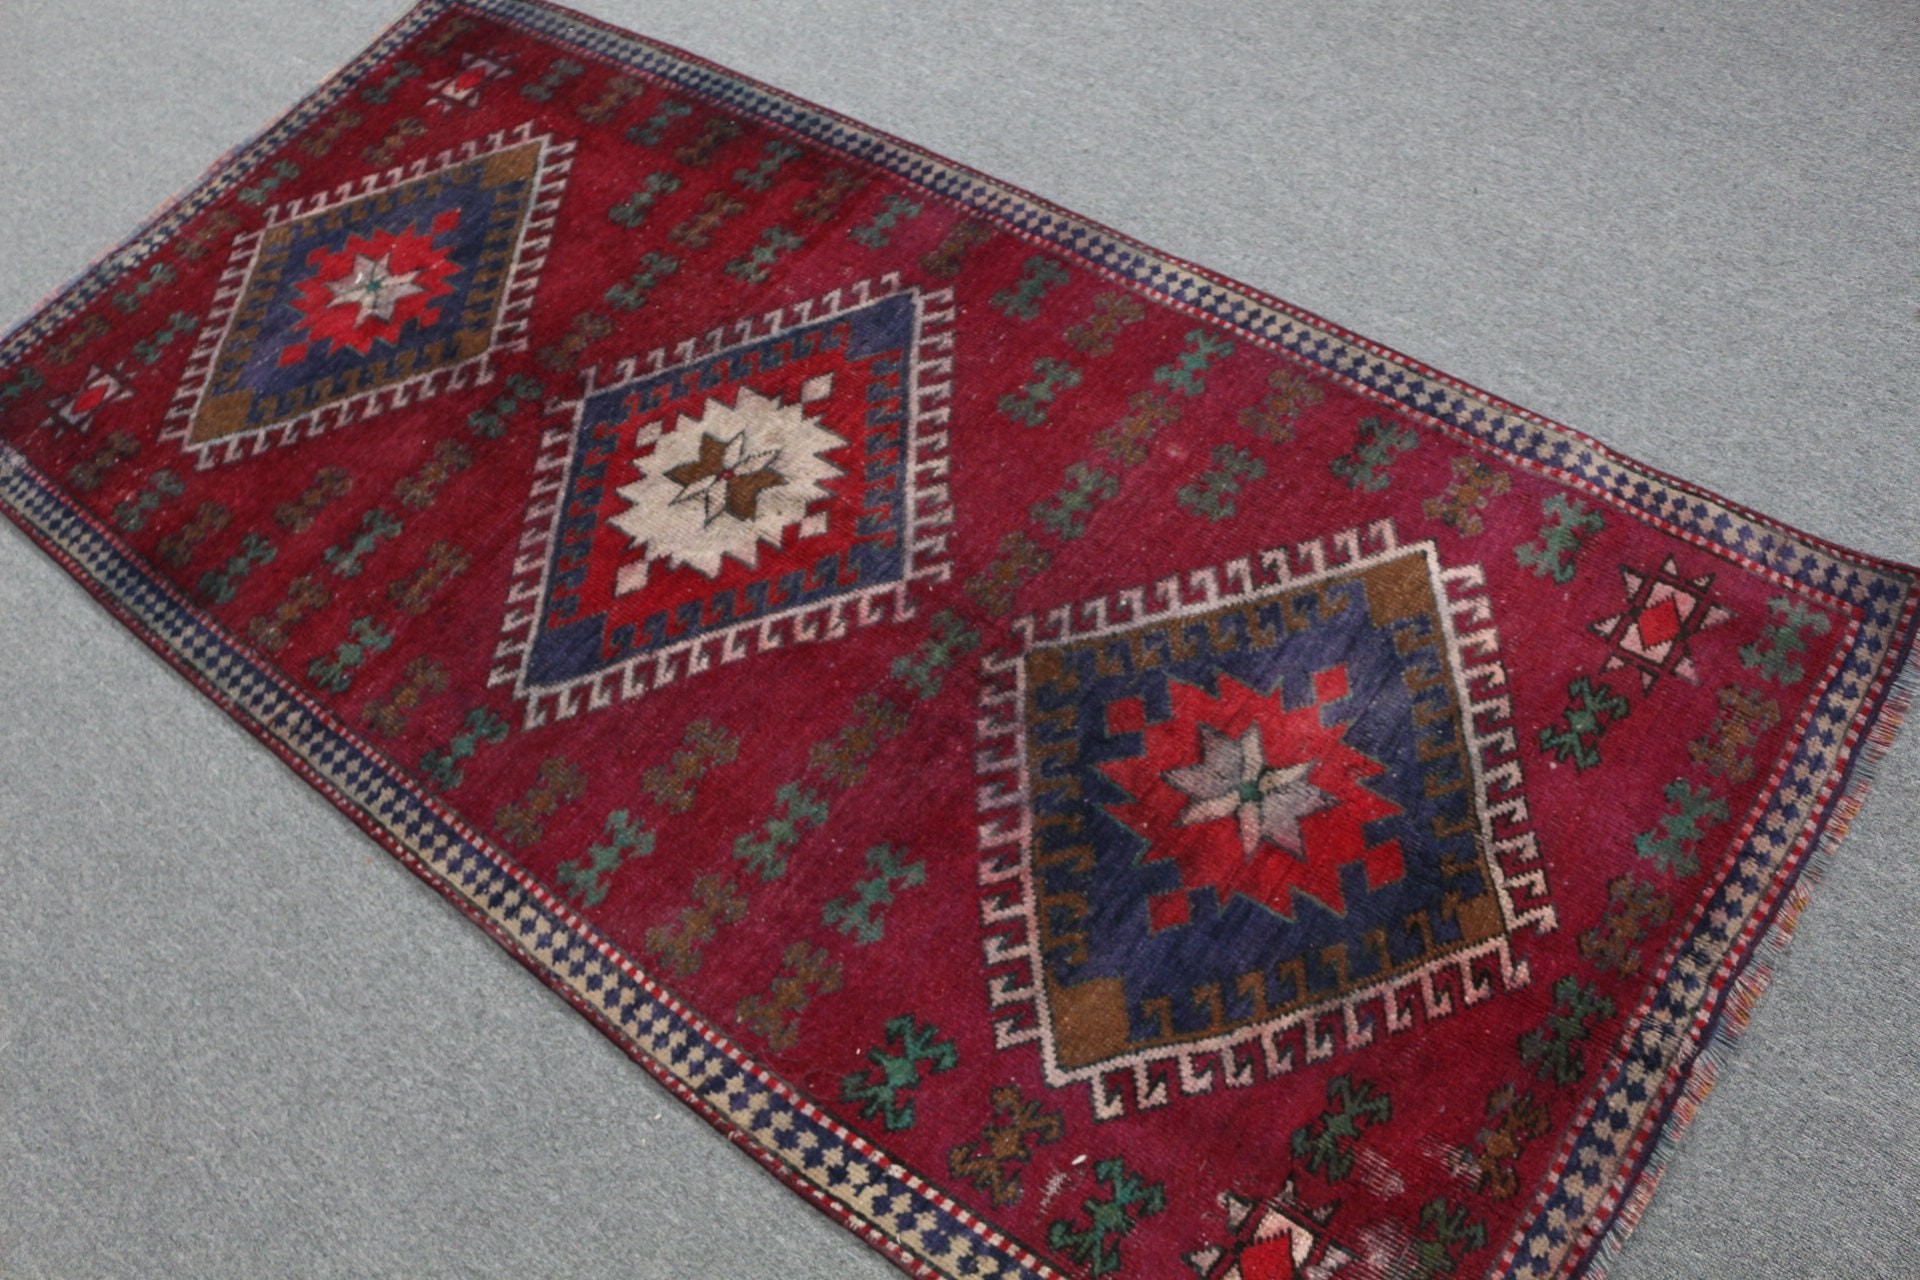 Vintage Rug, Kitchen Rug, Purple Oriental Rug, Turkish Rug, Antique Rugs, Moroccan Rugs, 3.2x6.6 ft Accent Rug, Ethnic Rugs, Bedroom Rugs